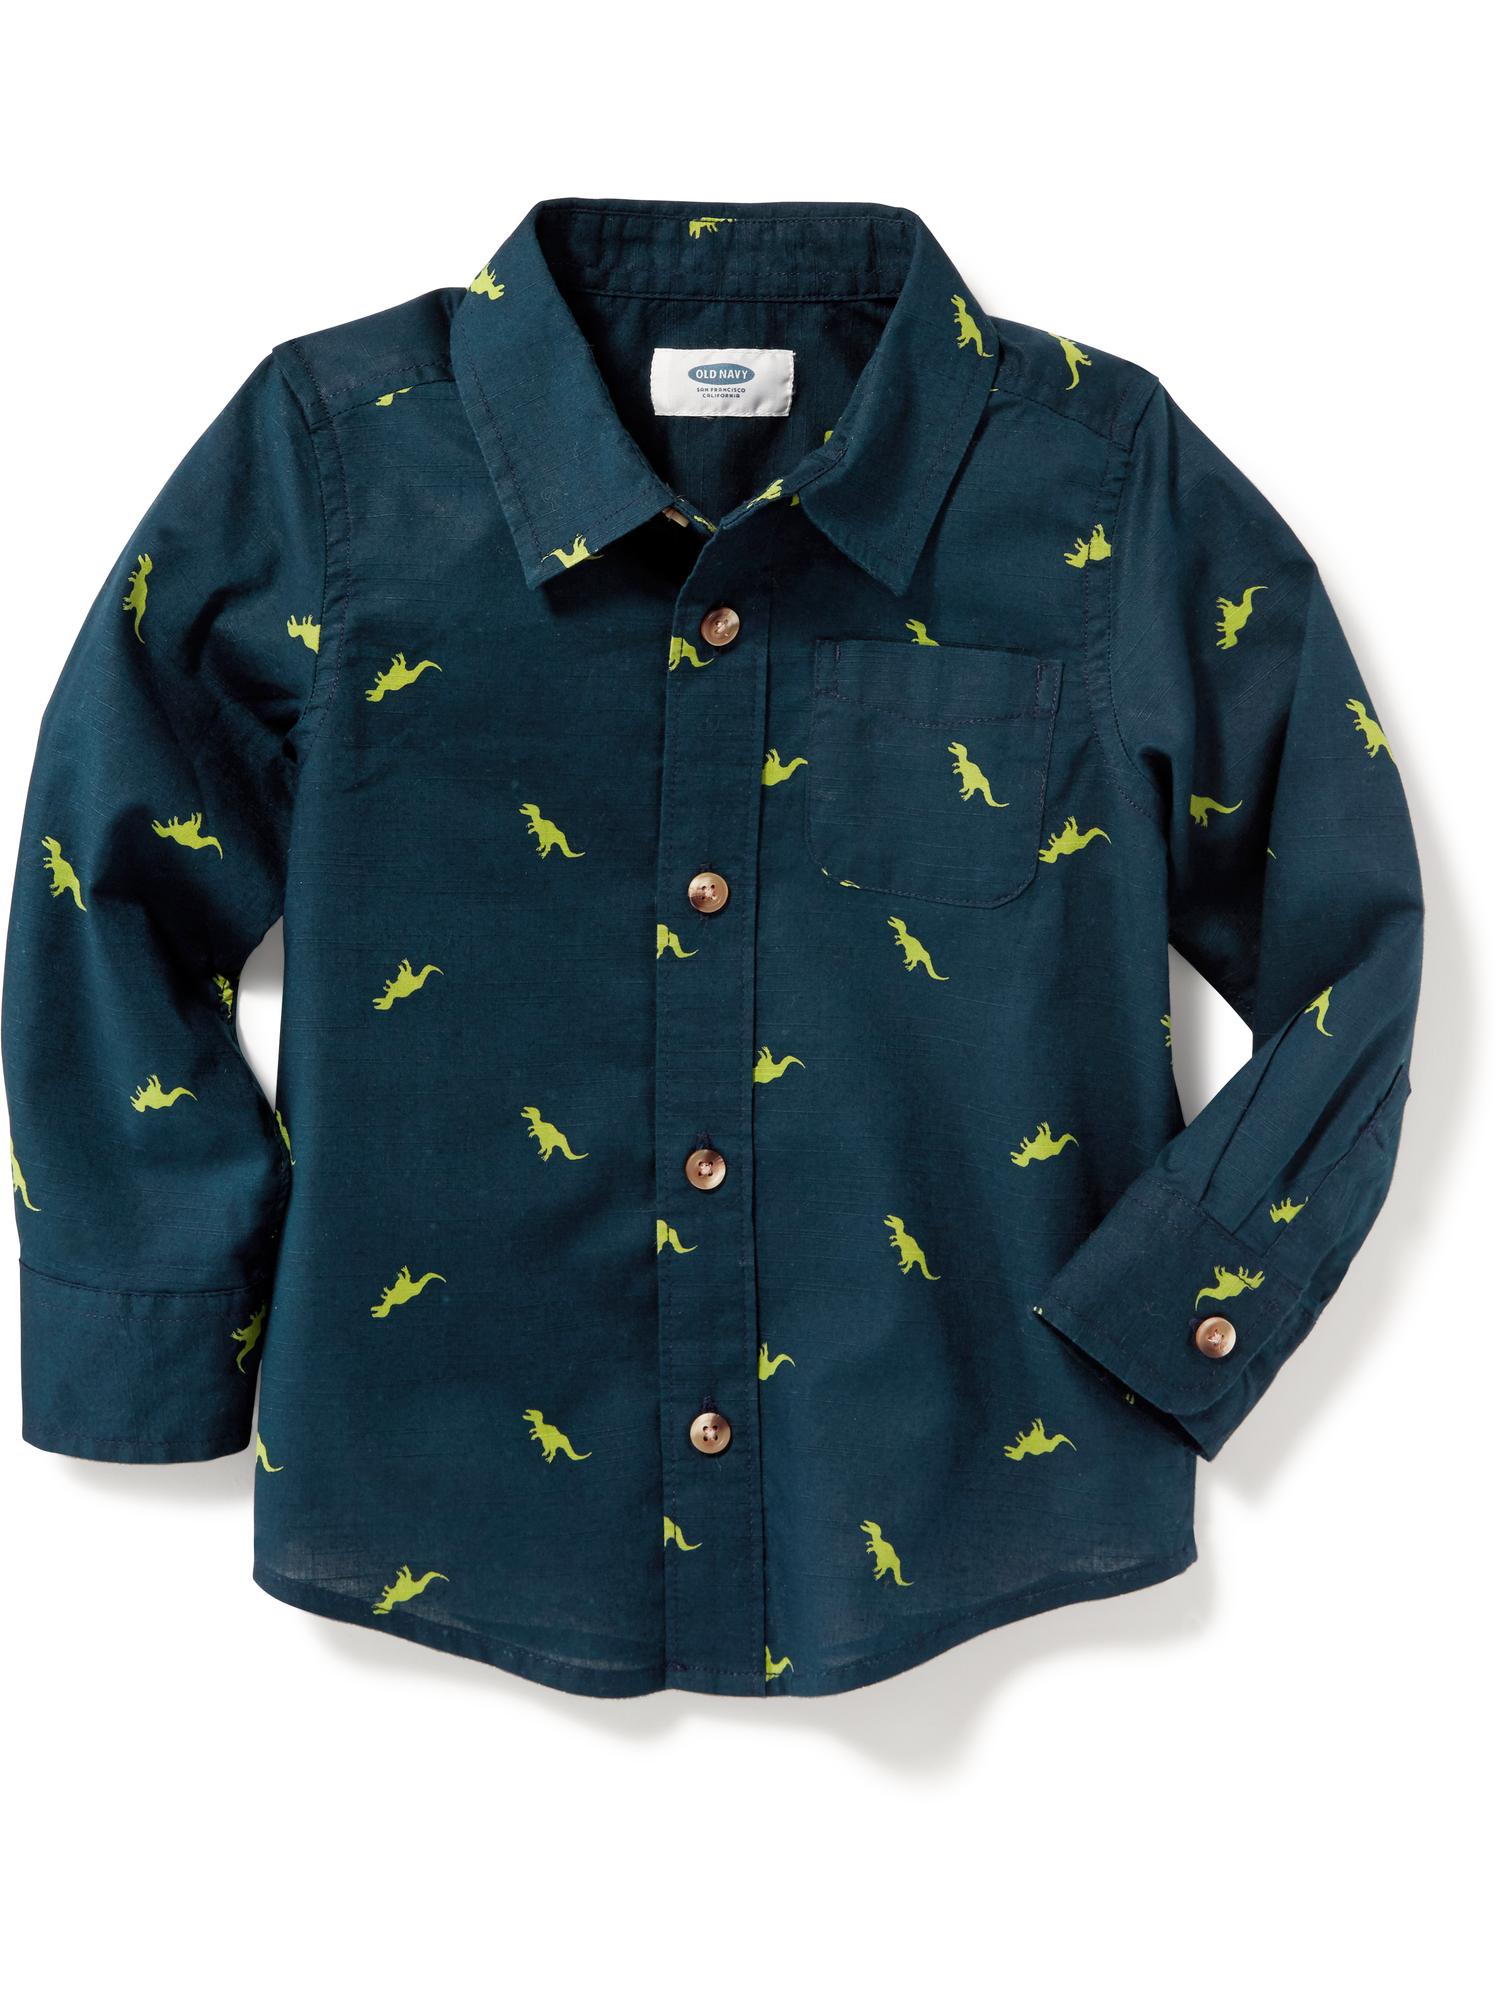 Dinosaur-Print Slub-Weave Shirt for Toddler Boys | Old Navy